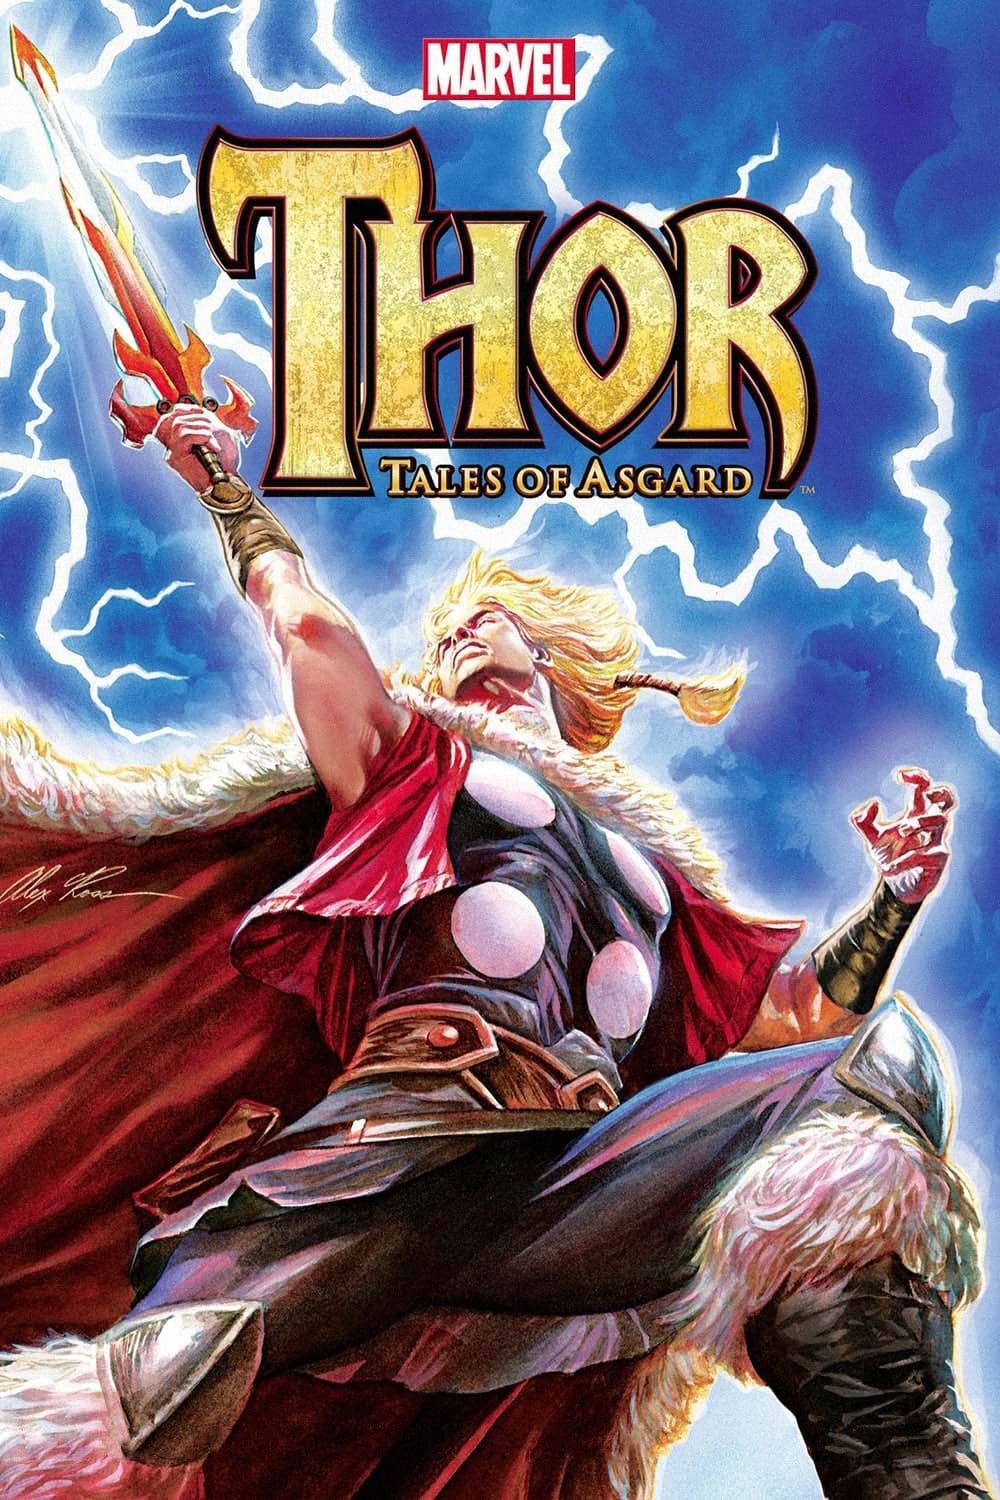 Thor: Tales of Asgard [HD] (2011)